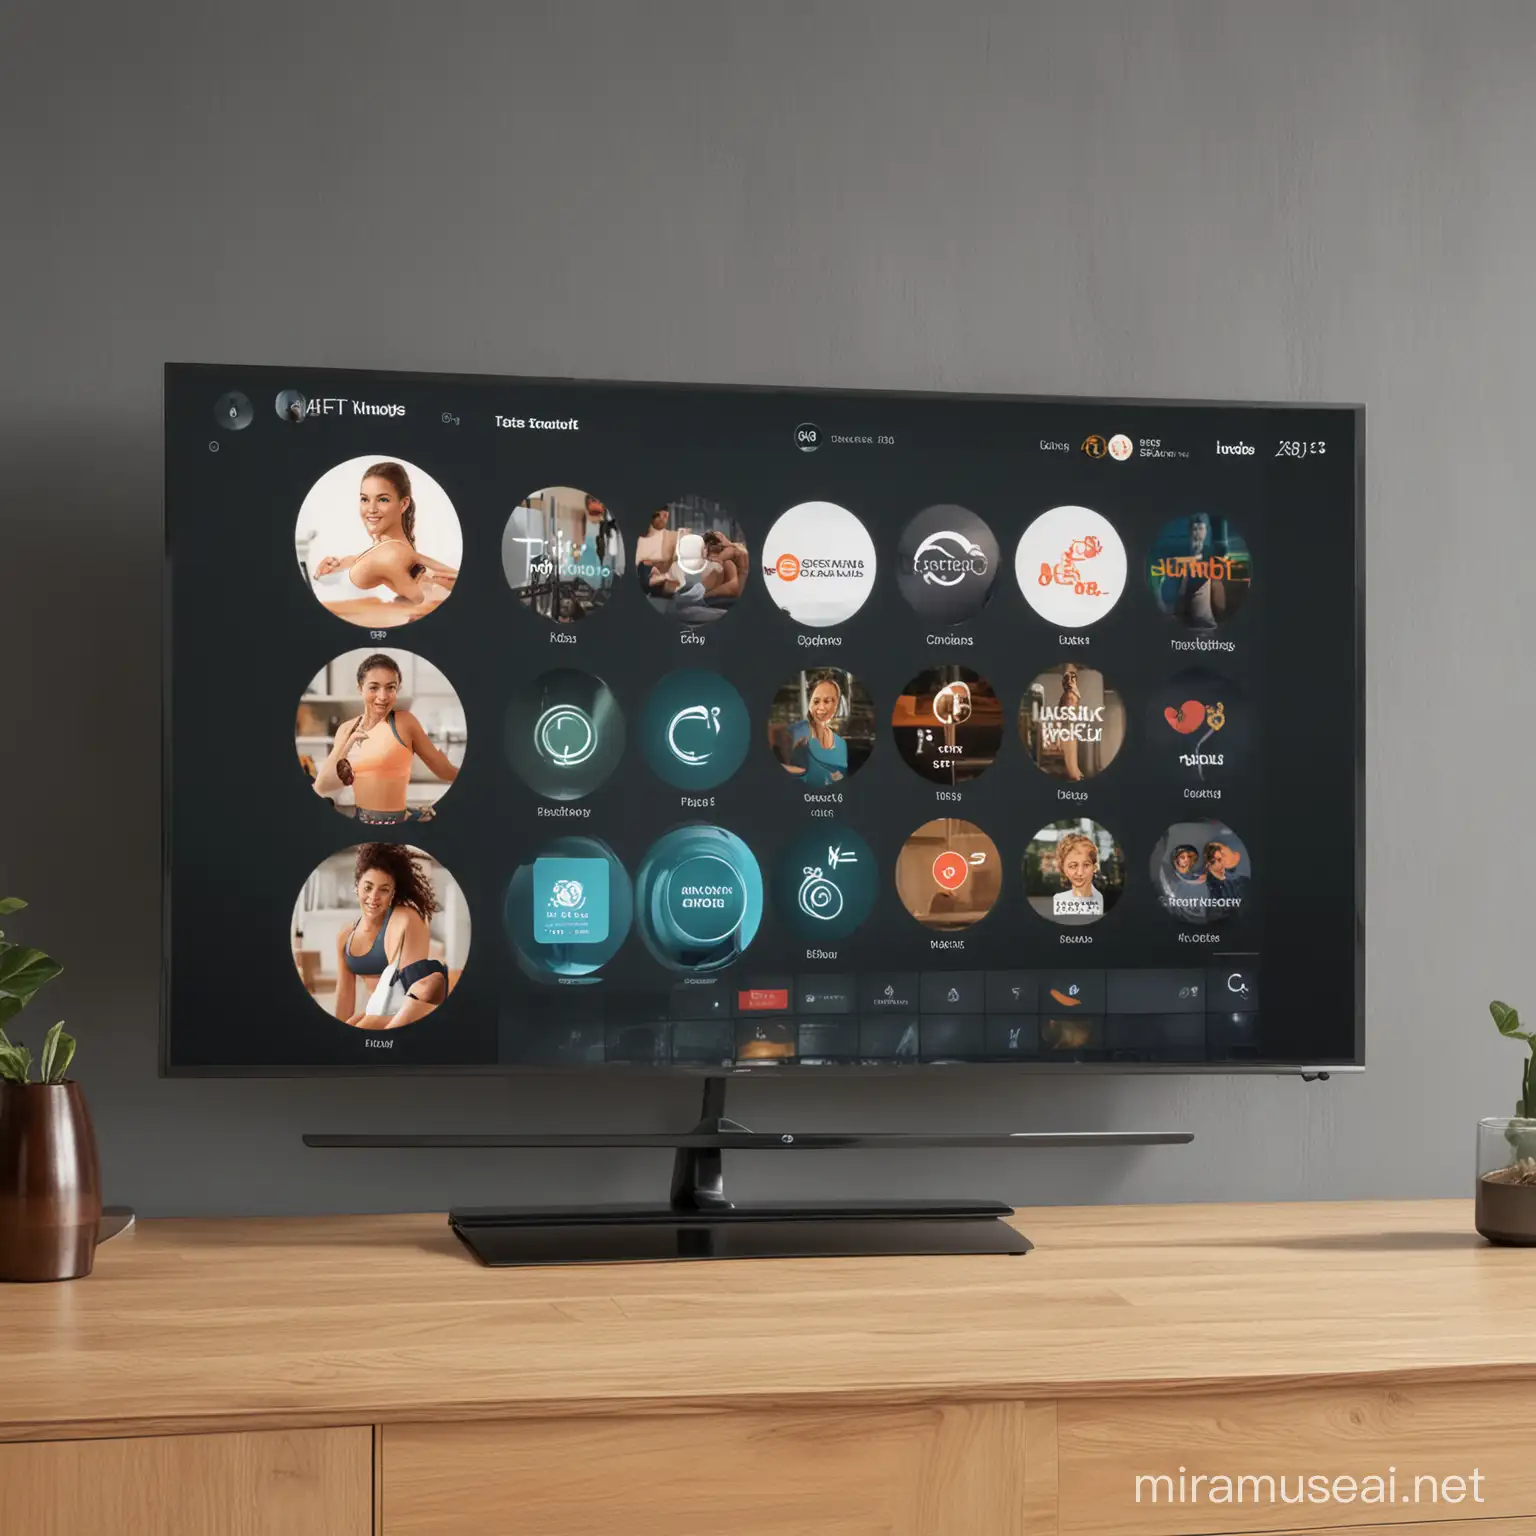 Fitness Training Circles Displayed on Smart TV Sidebar